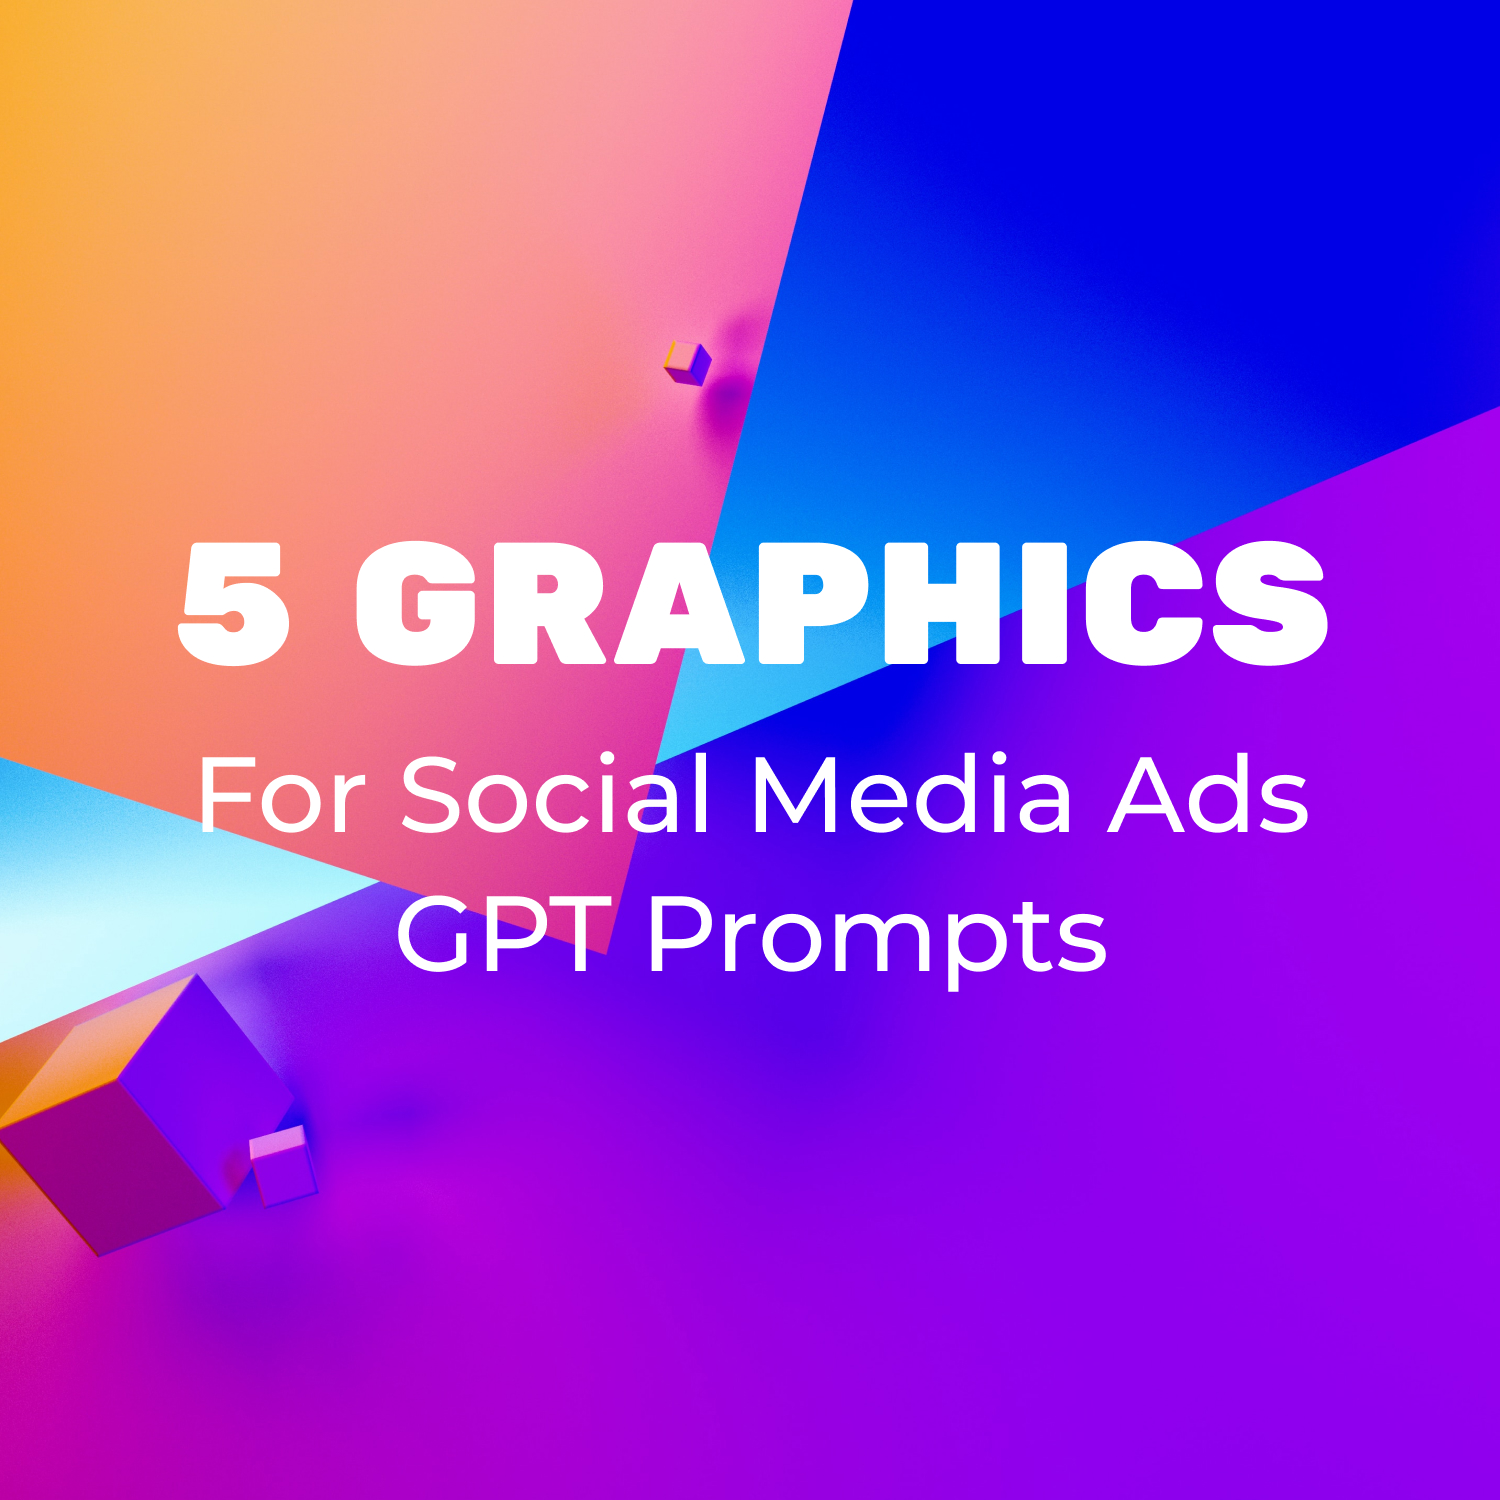 4 graphics for social media ads gpt prompts 929